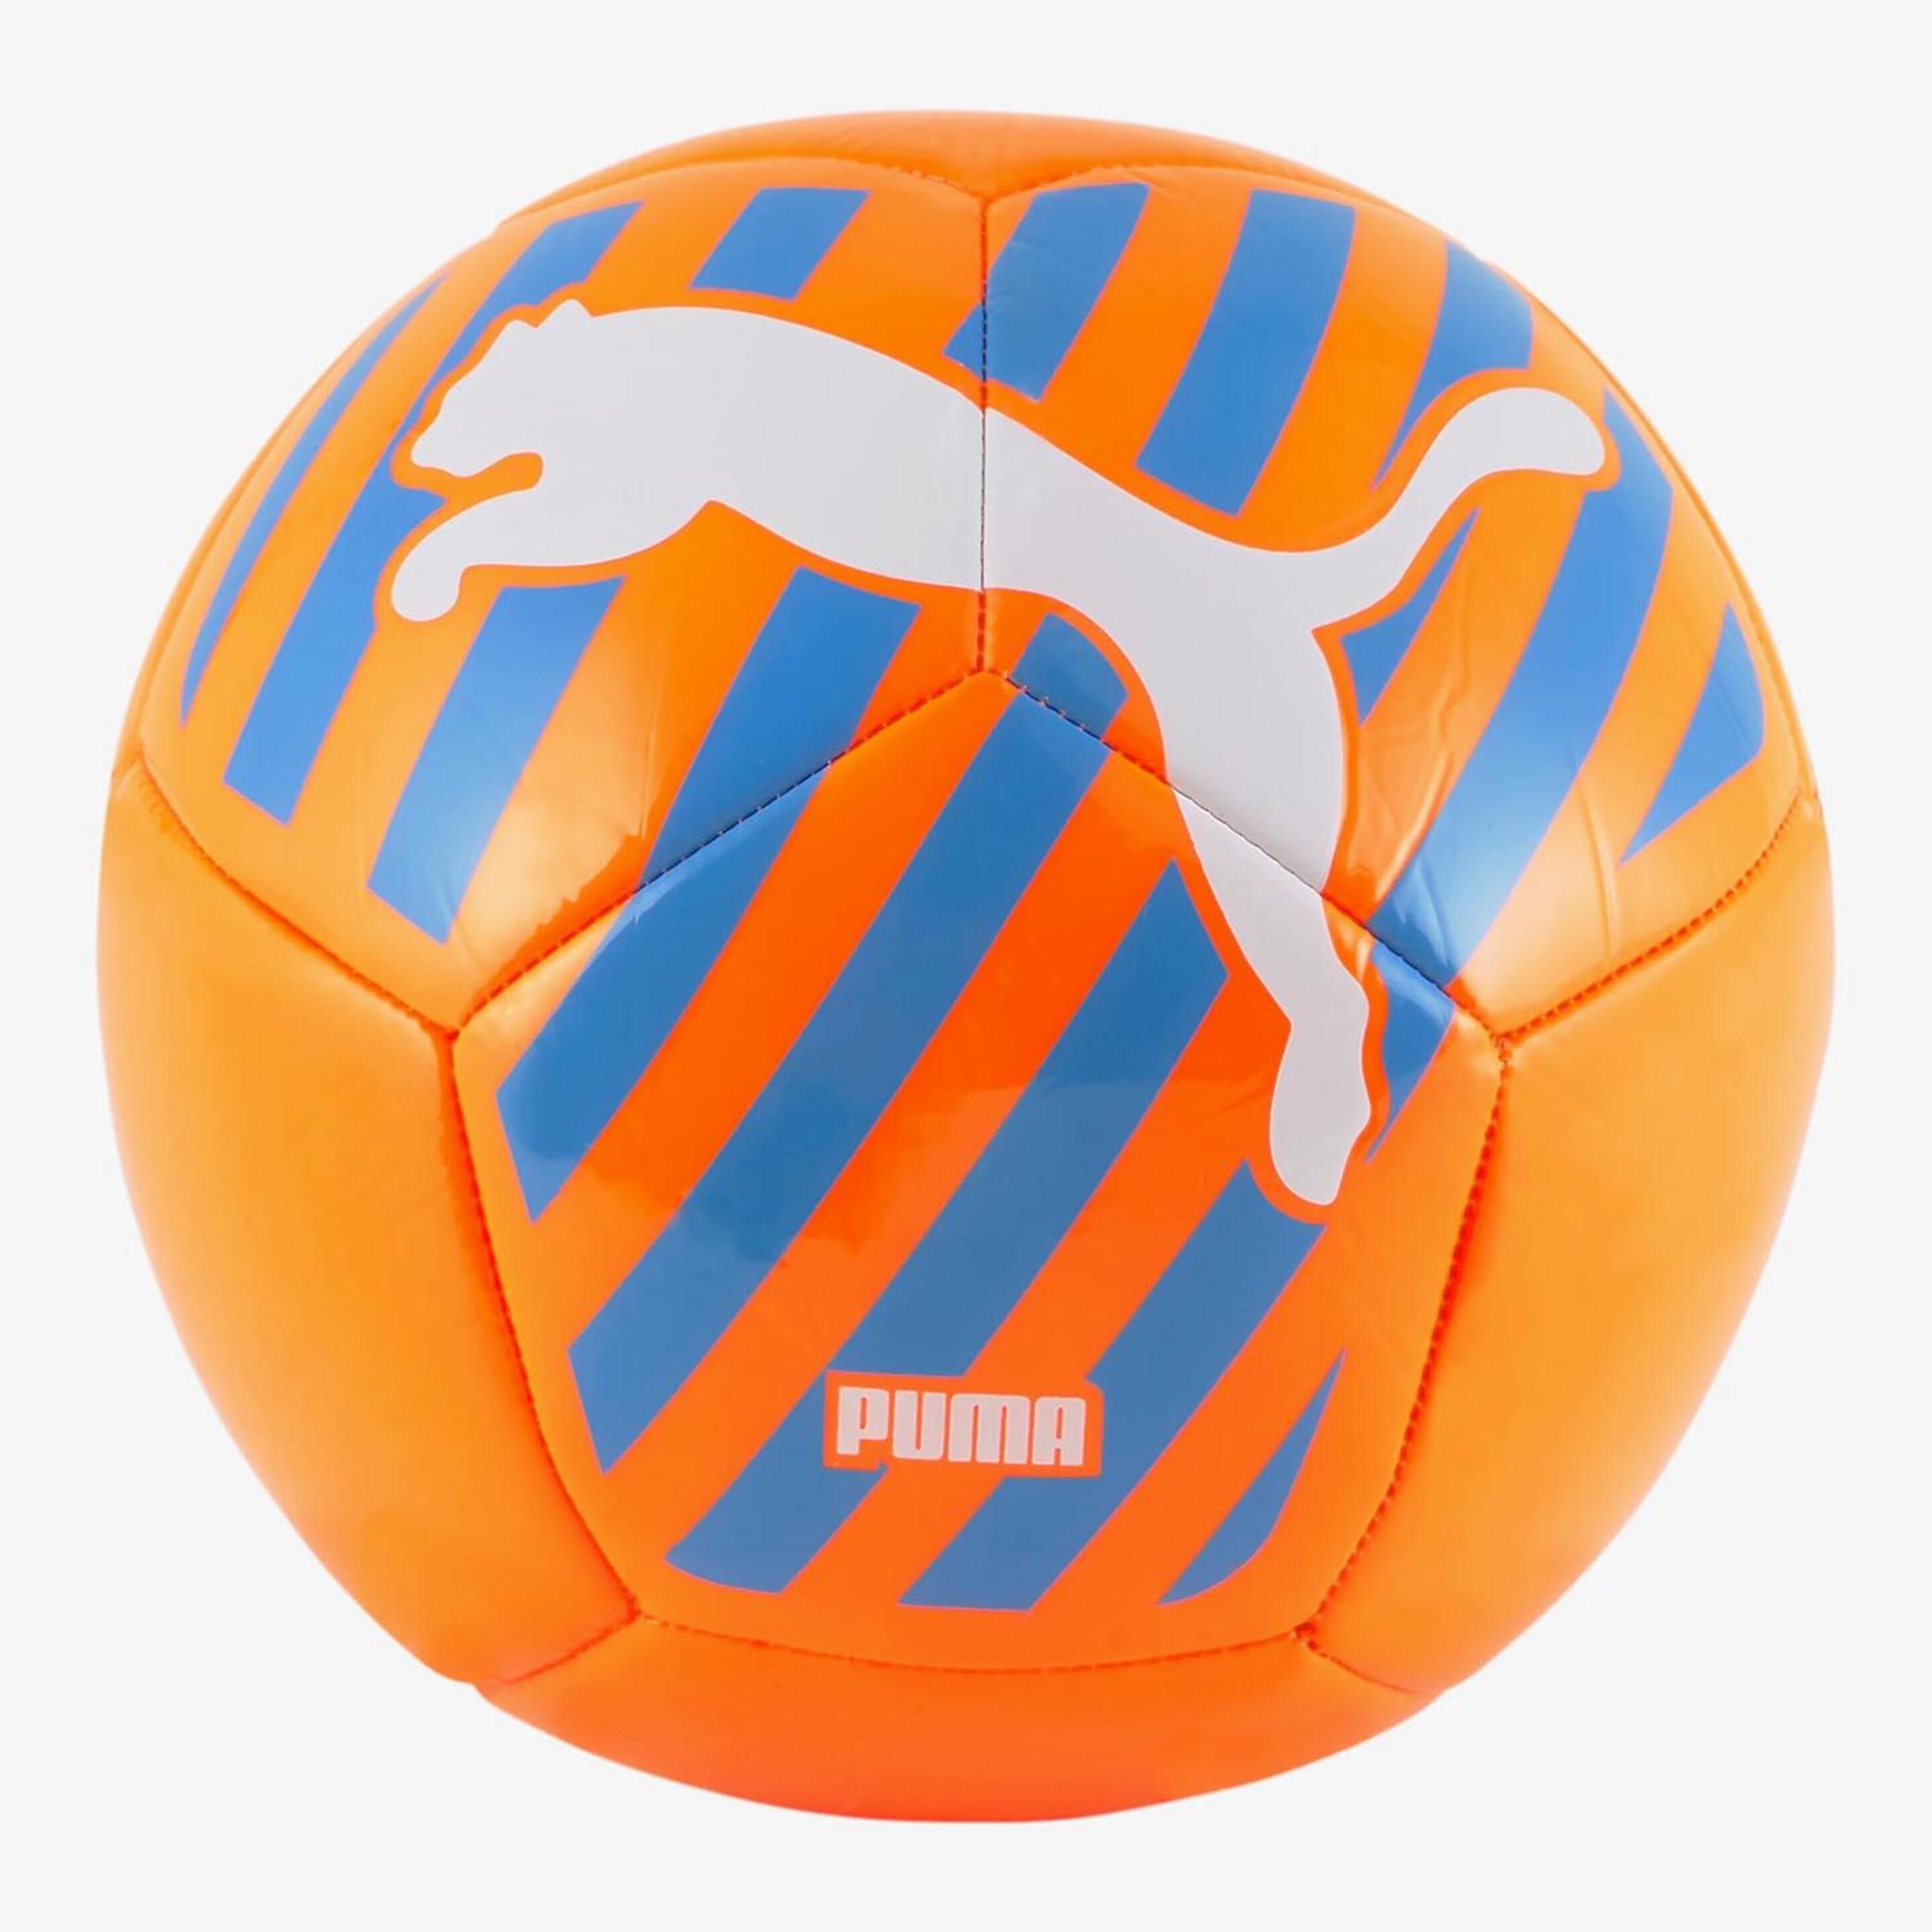 Bola Puma - naranja - Bola Futebol